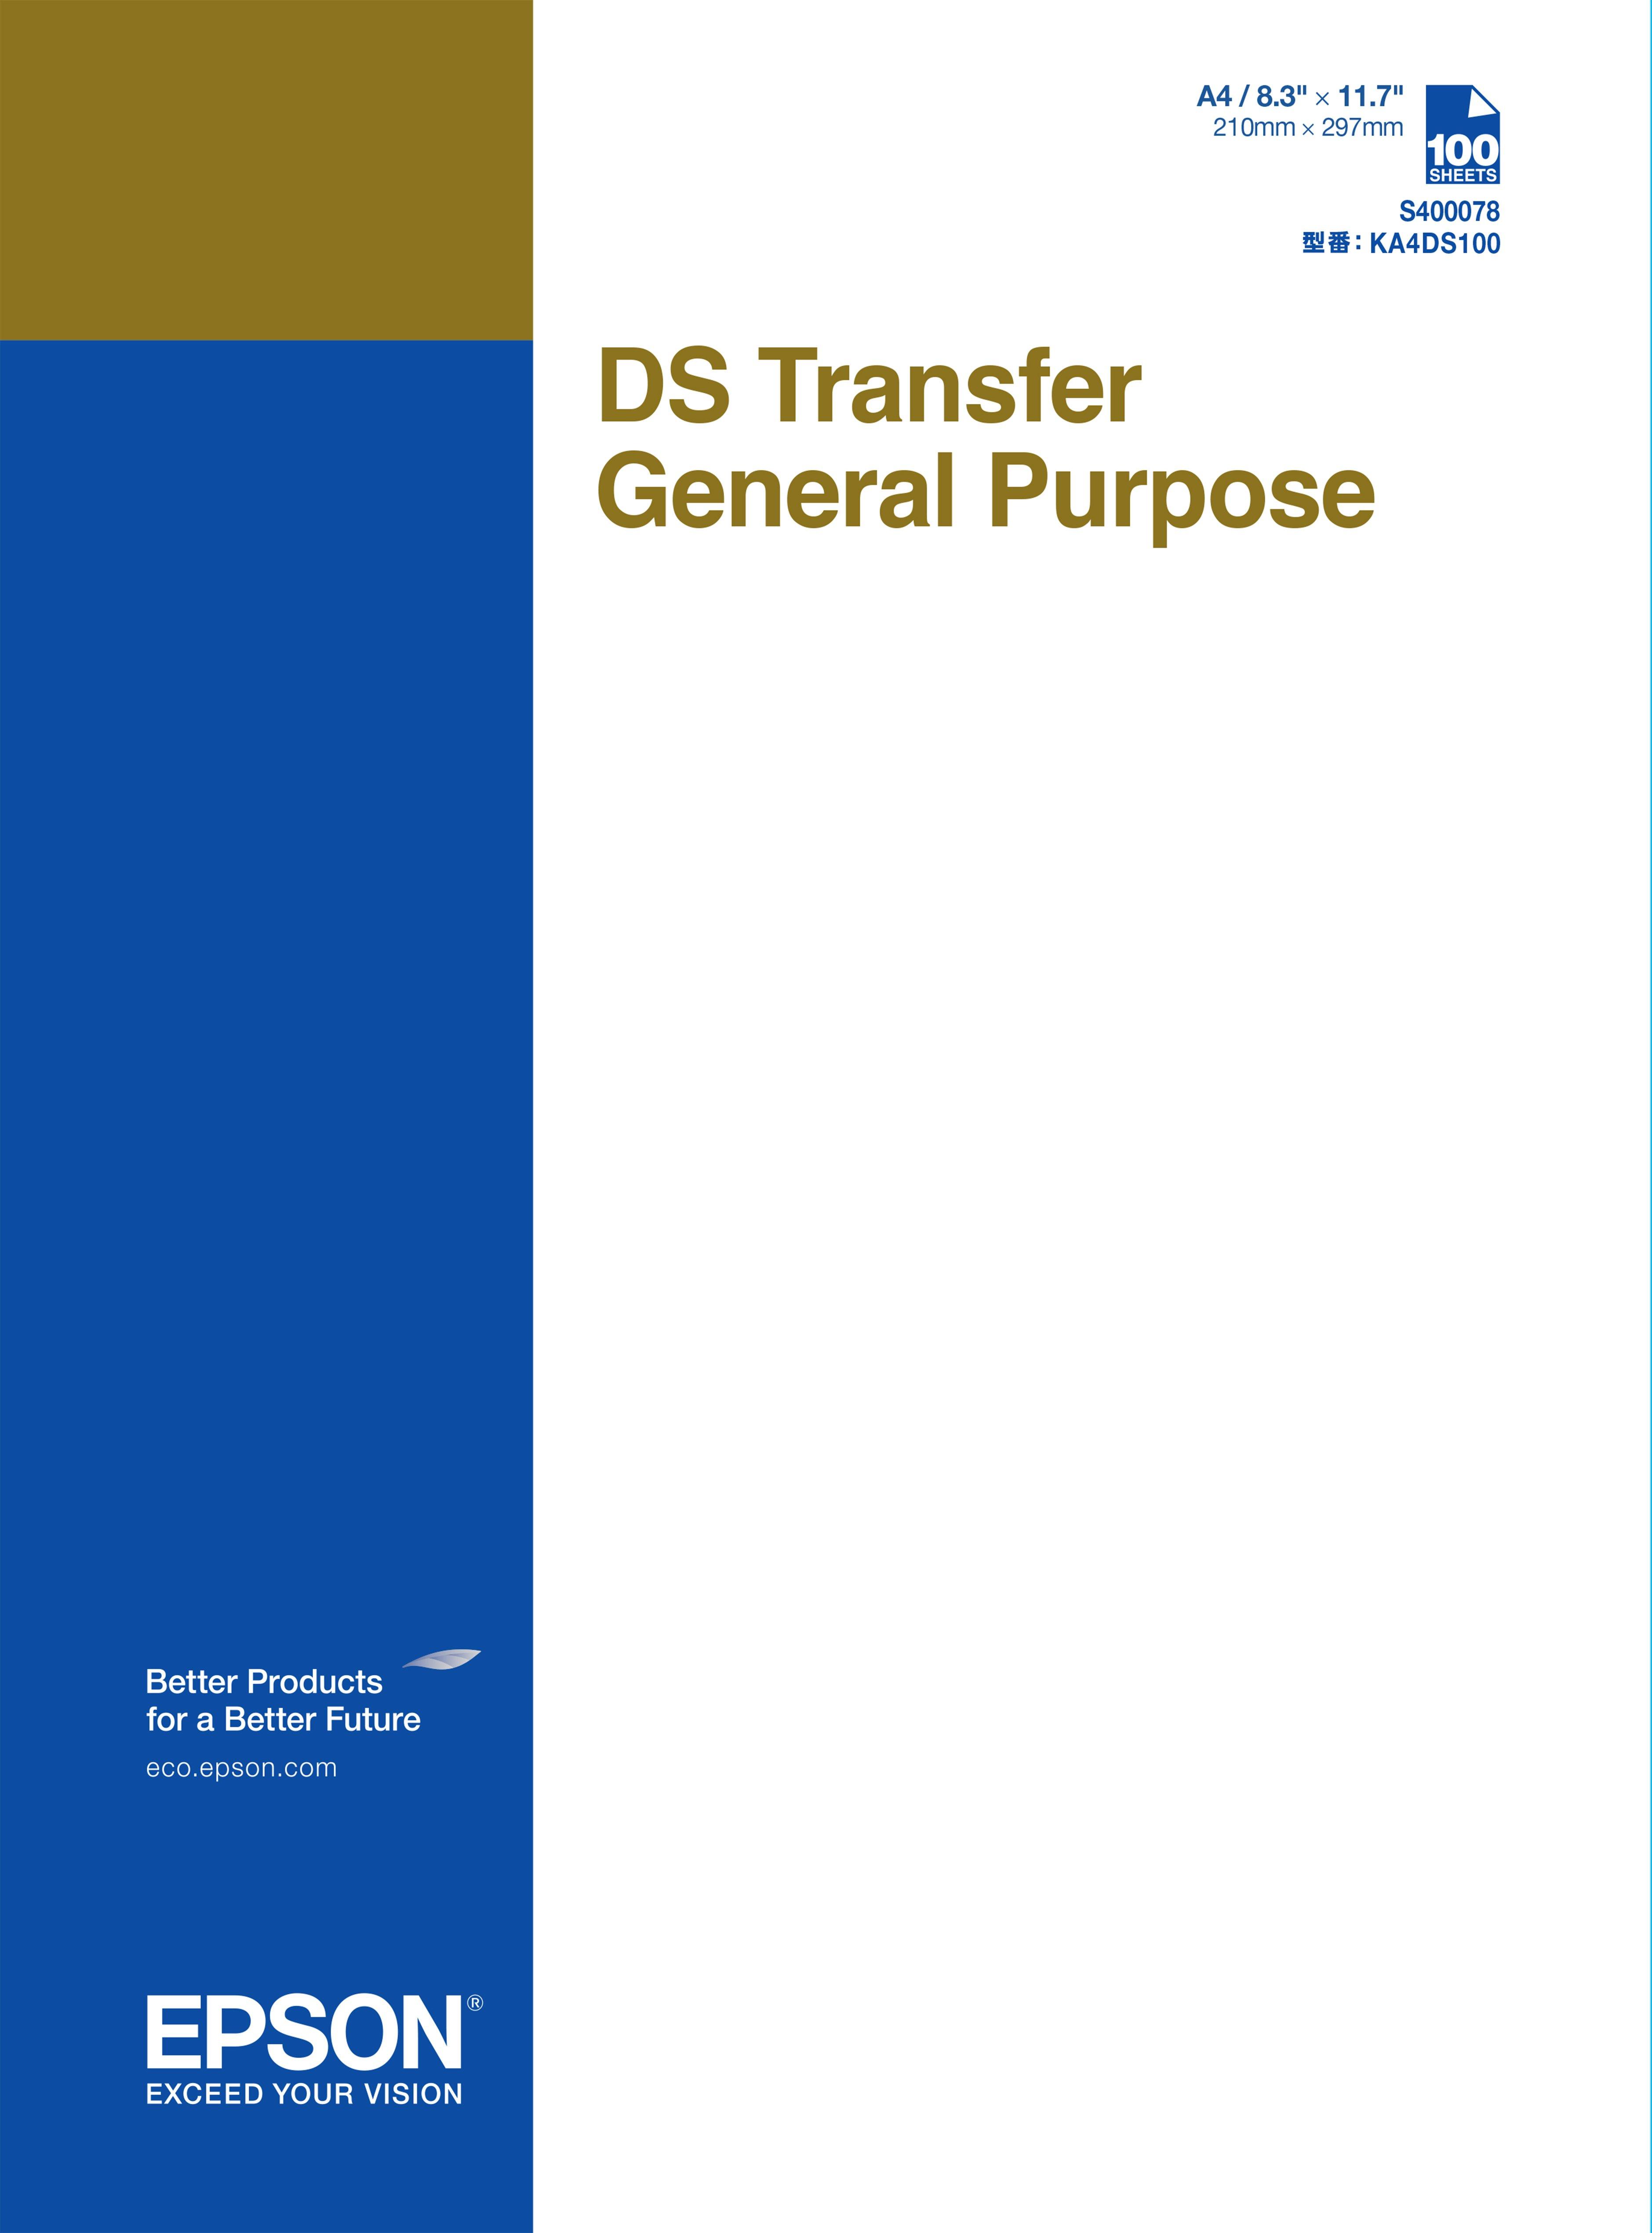 Feuilles A4 DS Transfer General Purpose